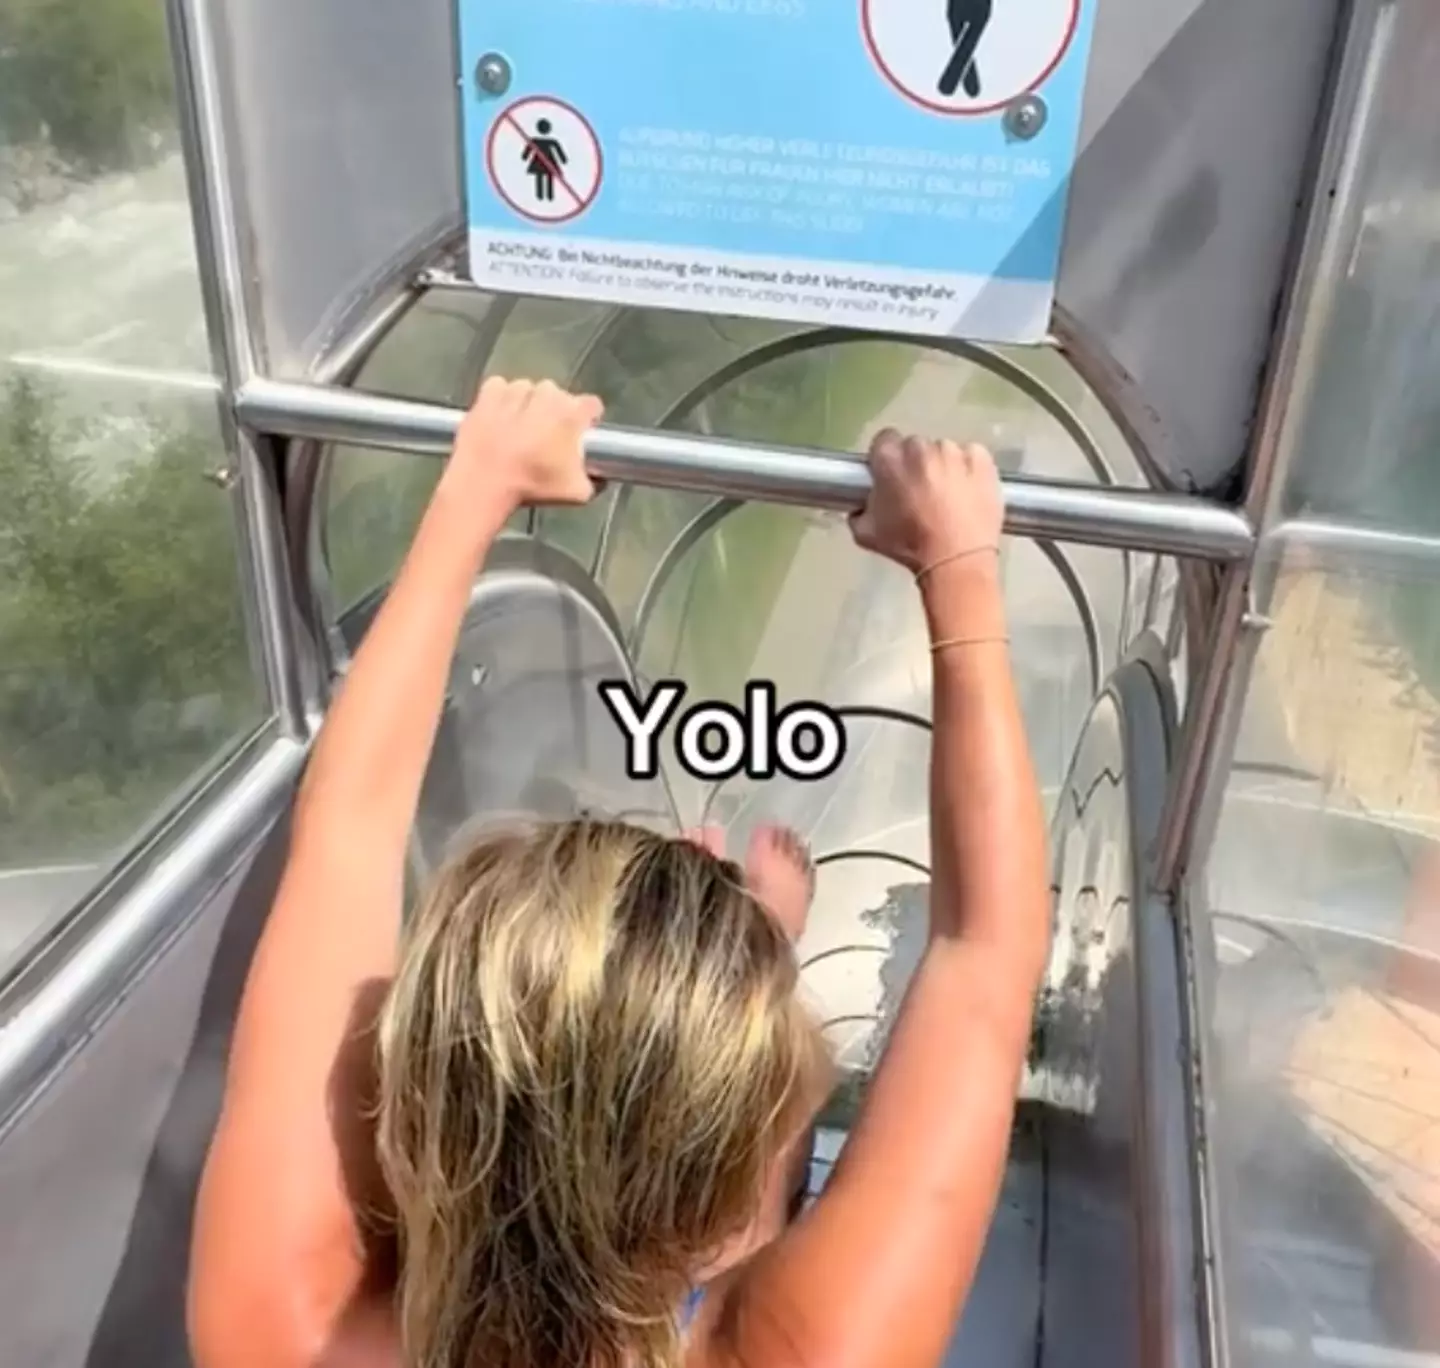 Iffland declared 'yolo' as she took on the slide. (TikTok/@rhiannaniffland)